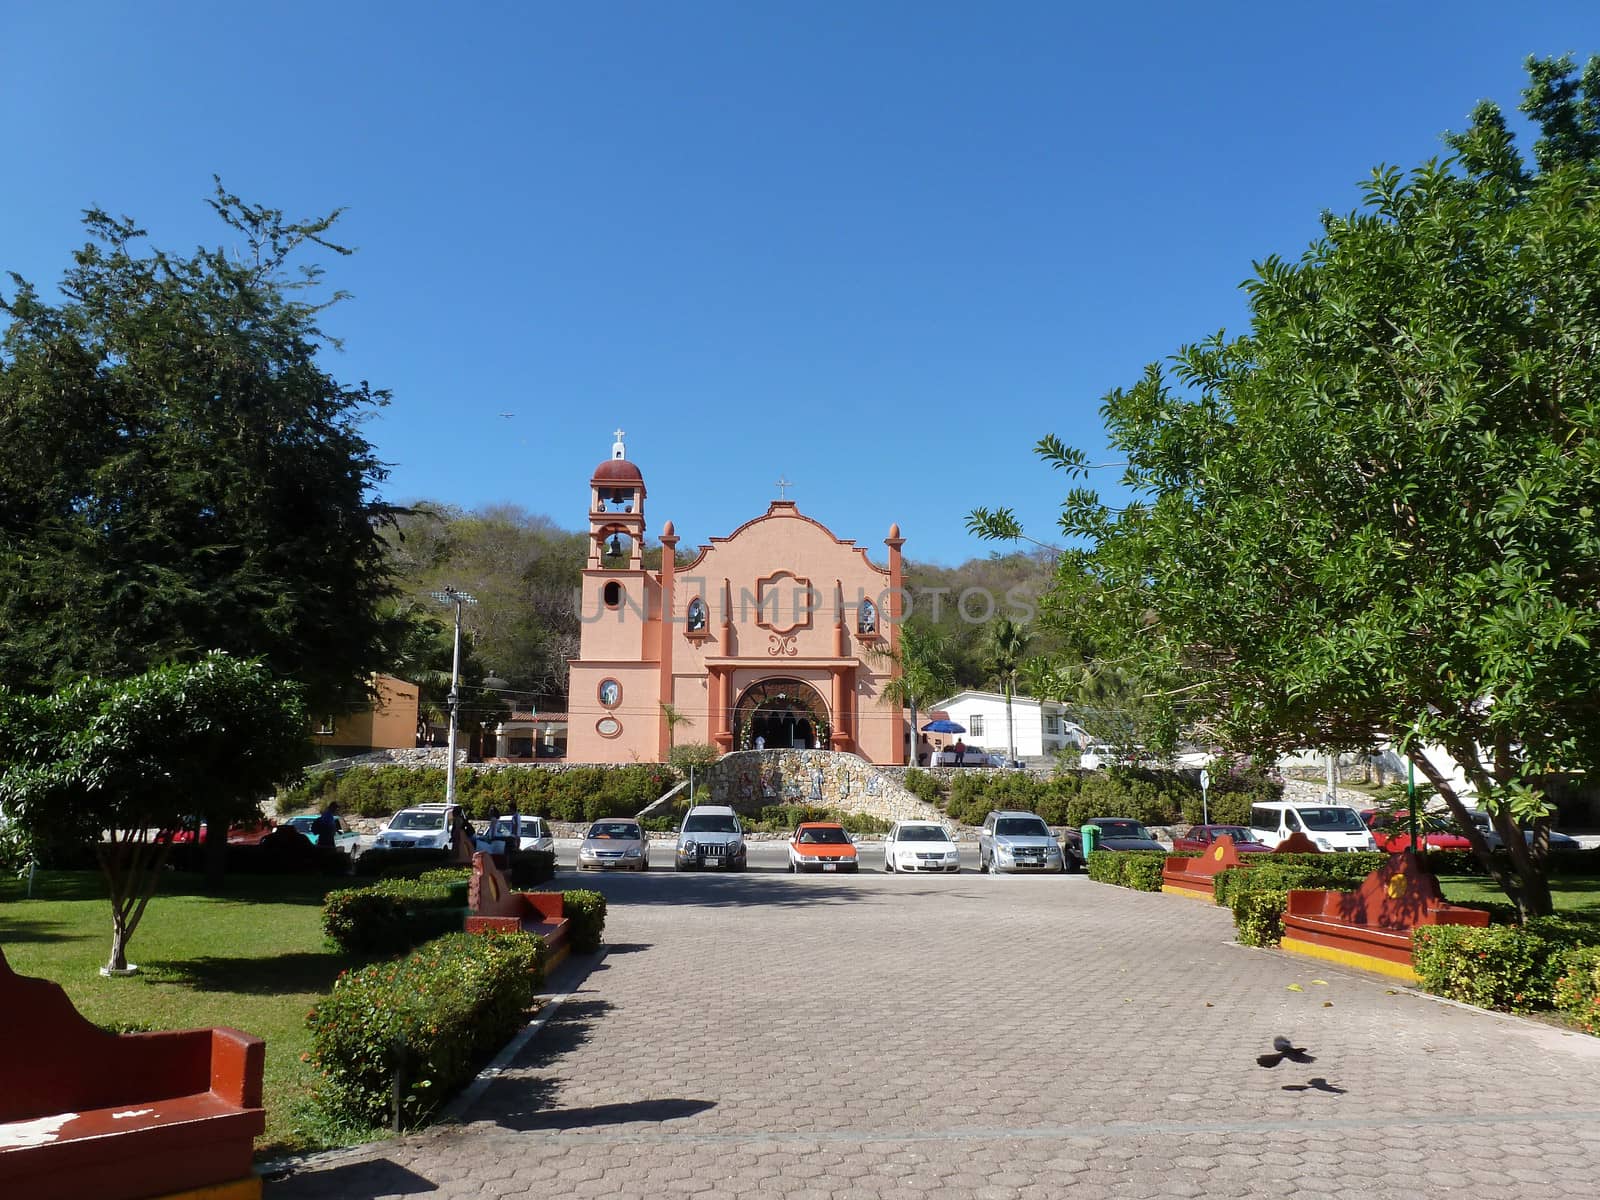 Huatulco Square and church by iwfrazer